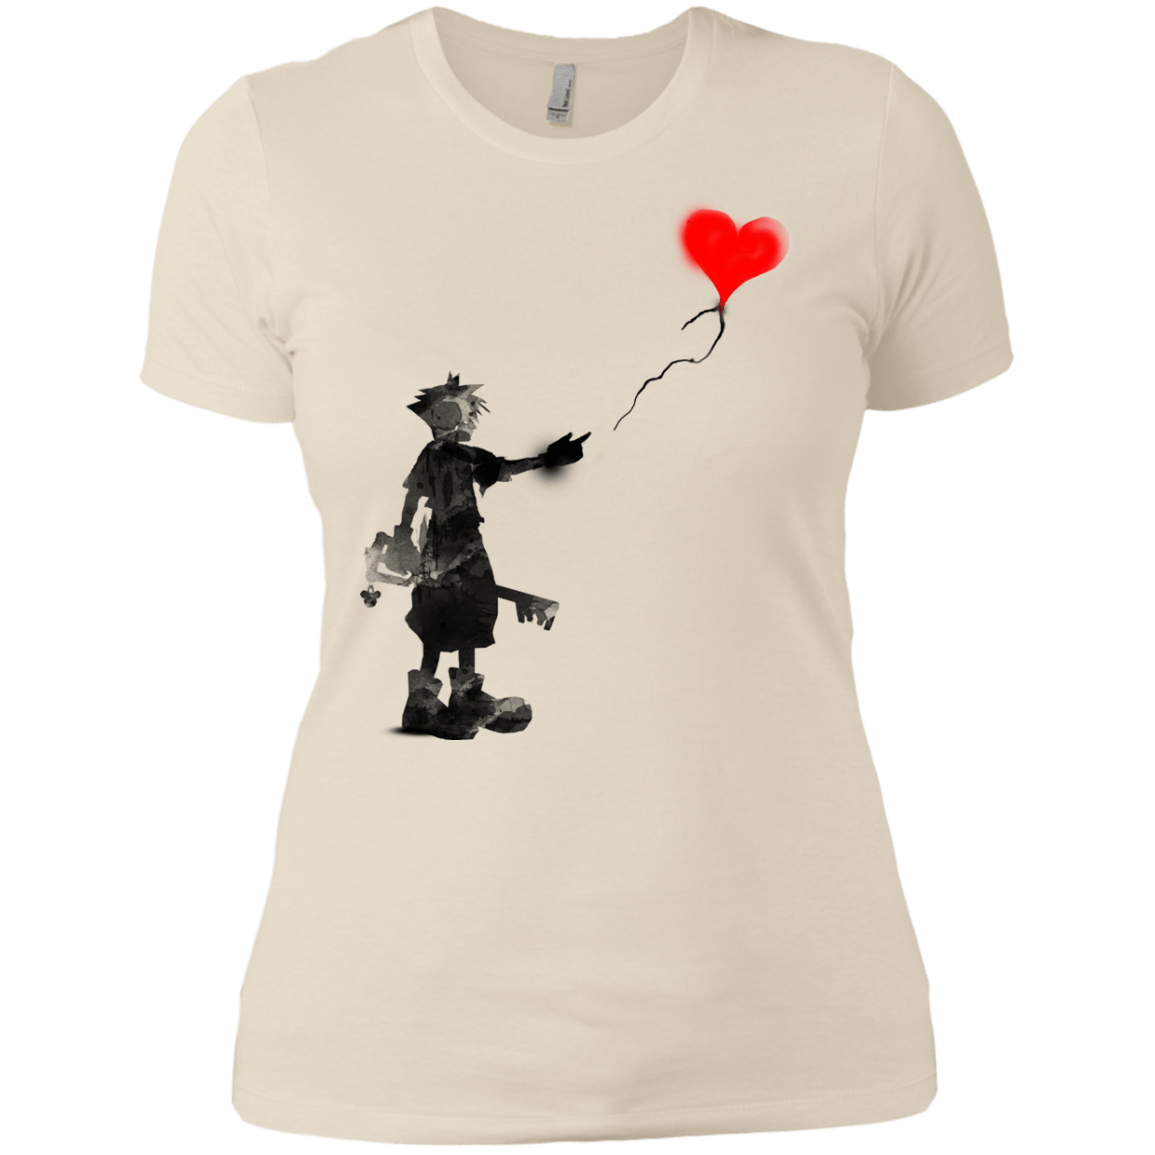 Boy and Balloon Women's Premium T-Shirt